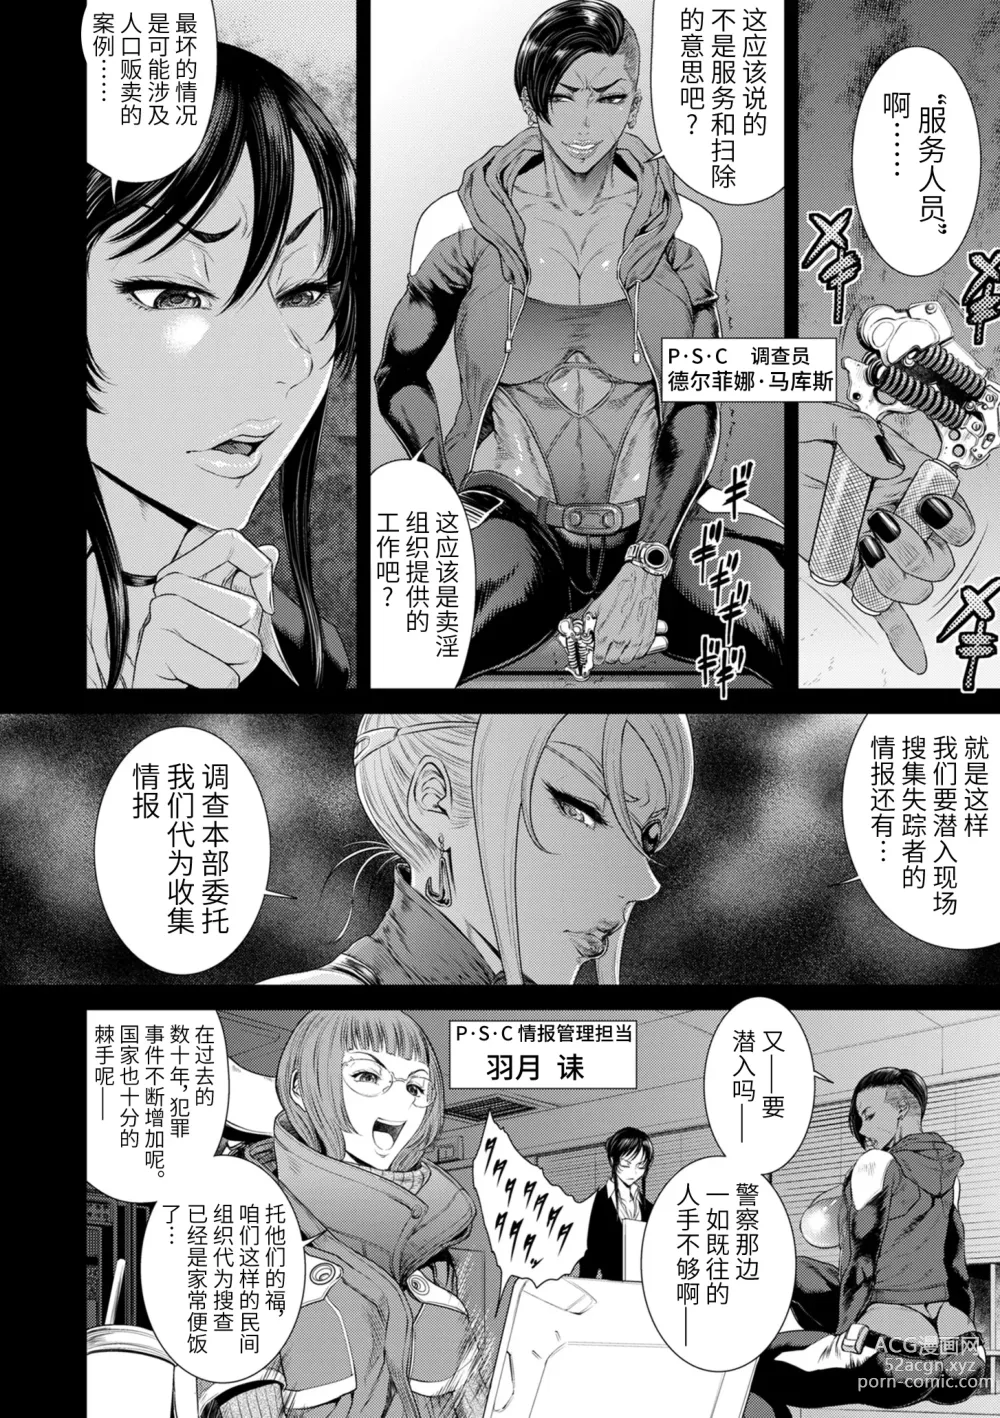 Page 8 of manga P.S.C Sennyuu Sousakan Reiko 1